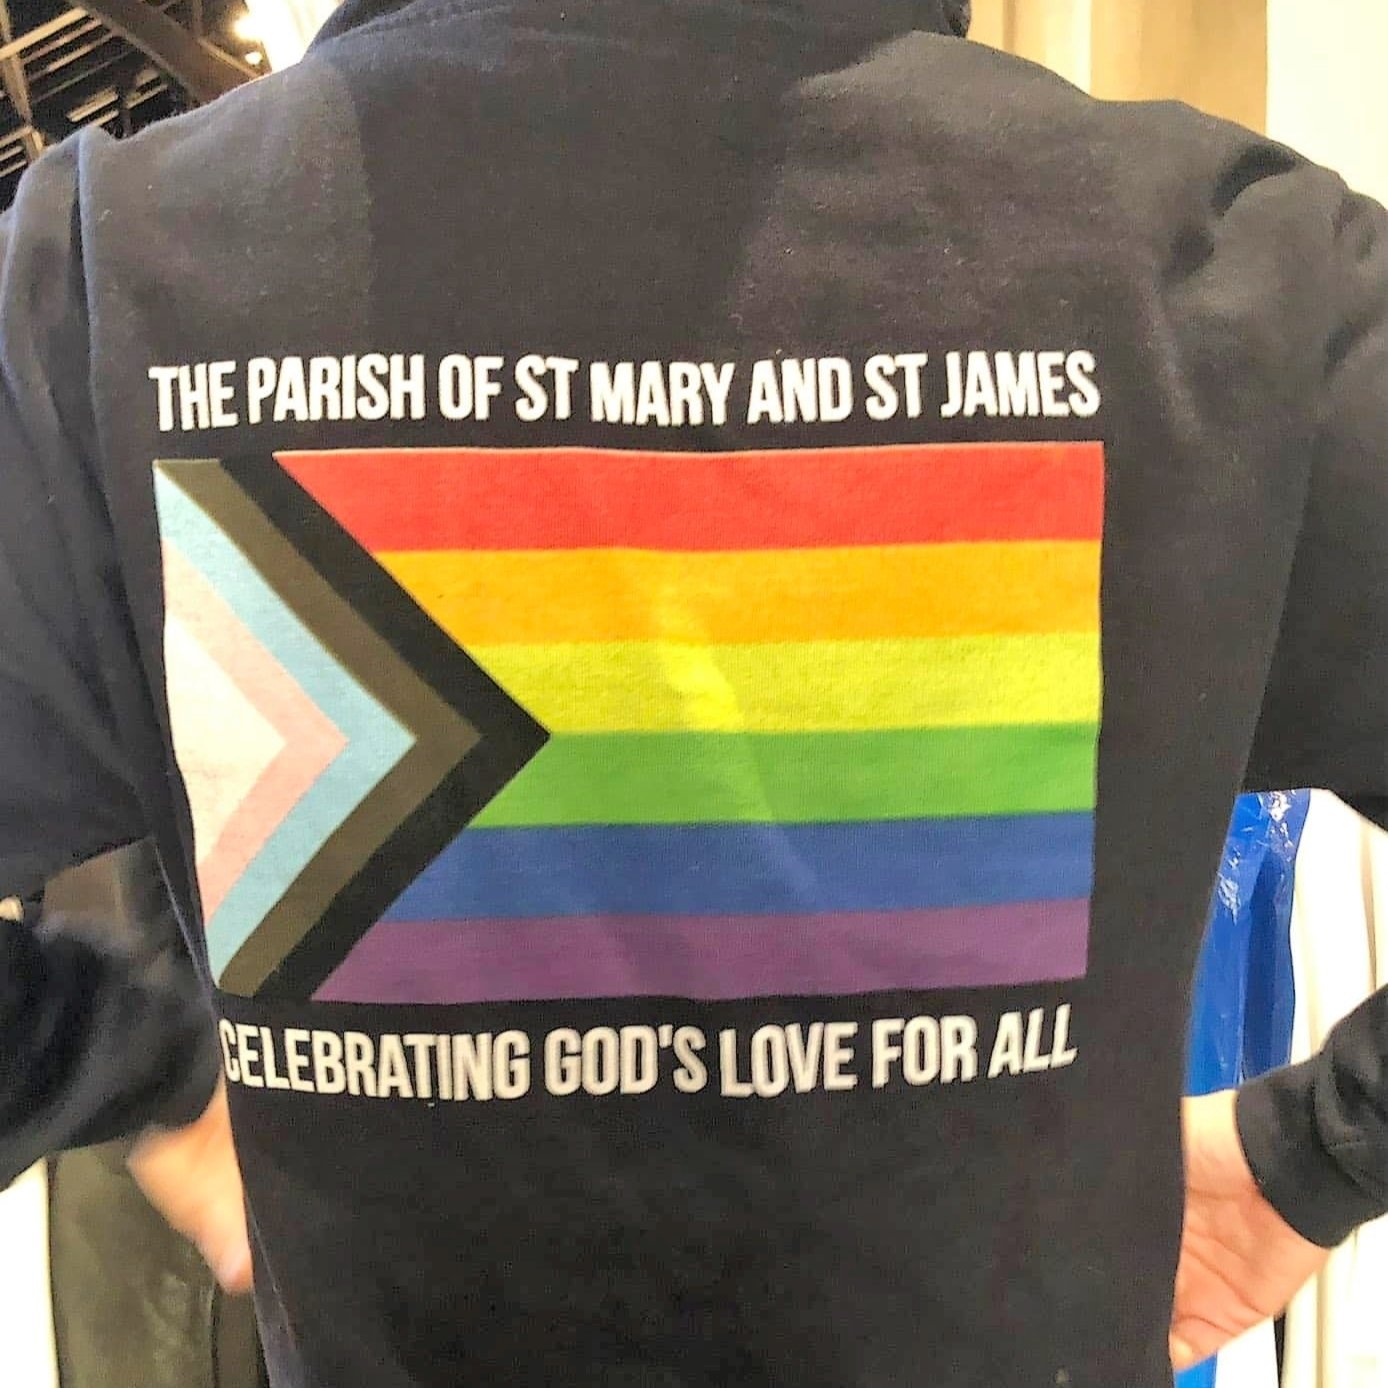  Robert’s parish team has sweatshirts displaying the Progress Pride flag with the slogan ‘Celebrating God’s love for all’ 